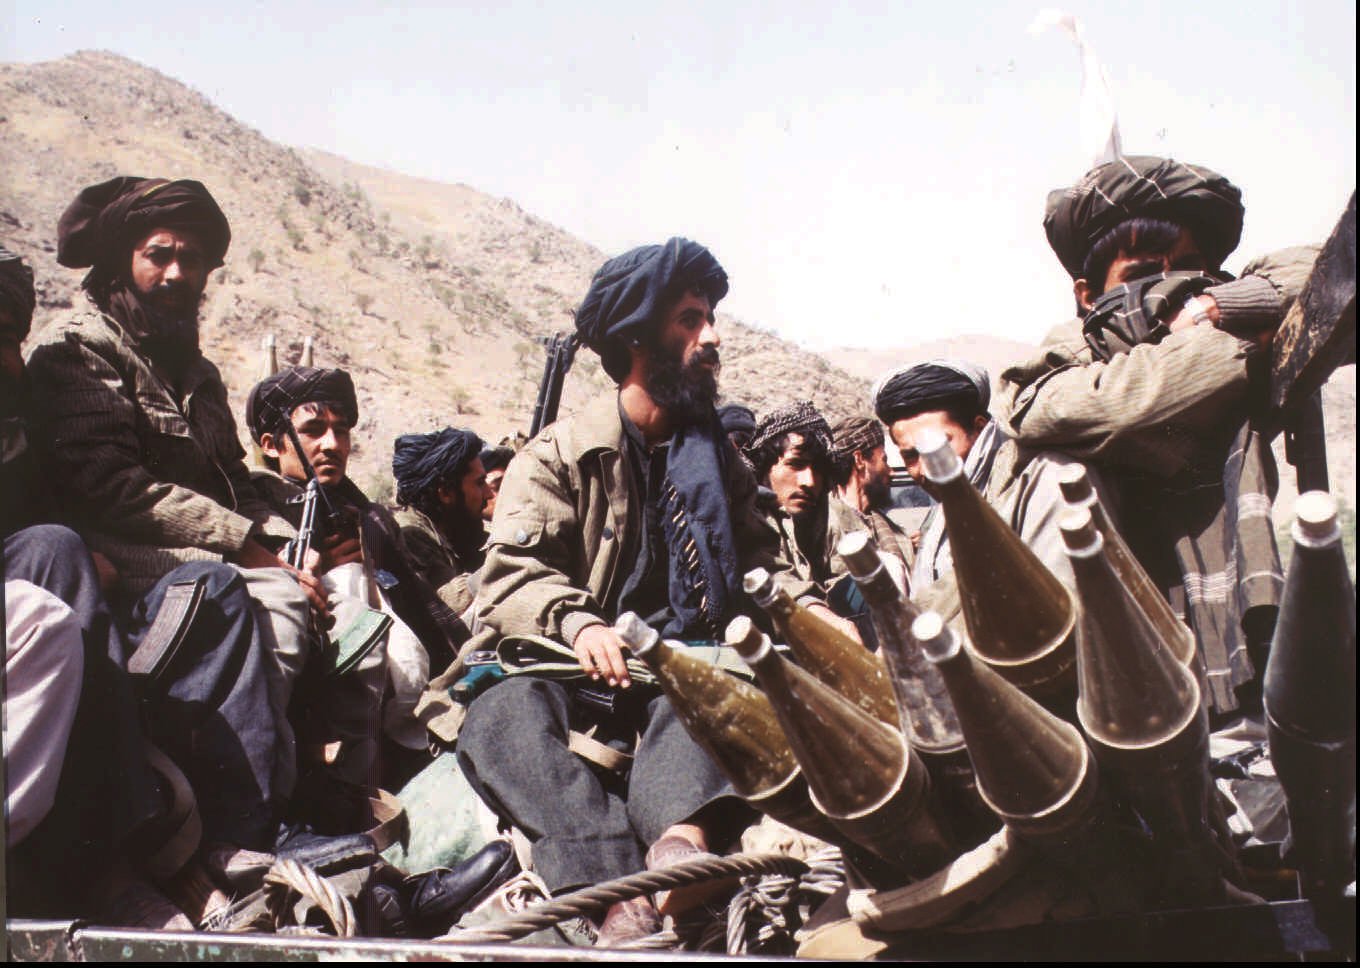 Сторонники движения «Талибан» на подходе к Кабулу, Афганистан. 3 октября 1996